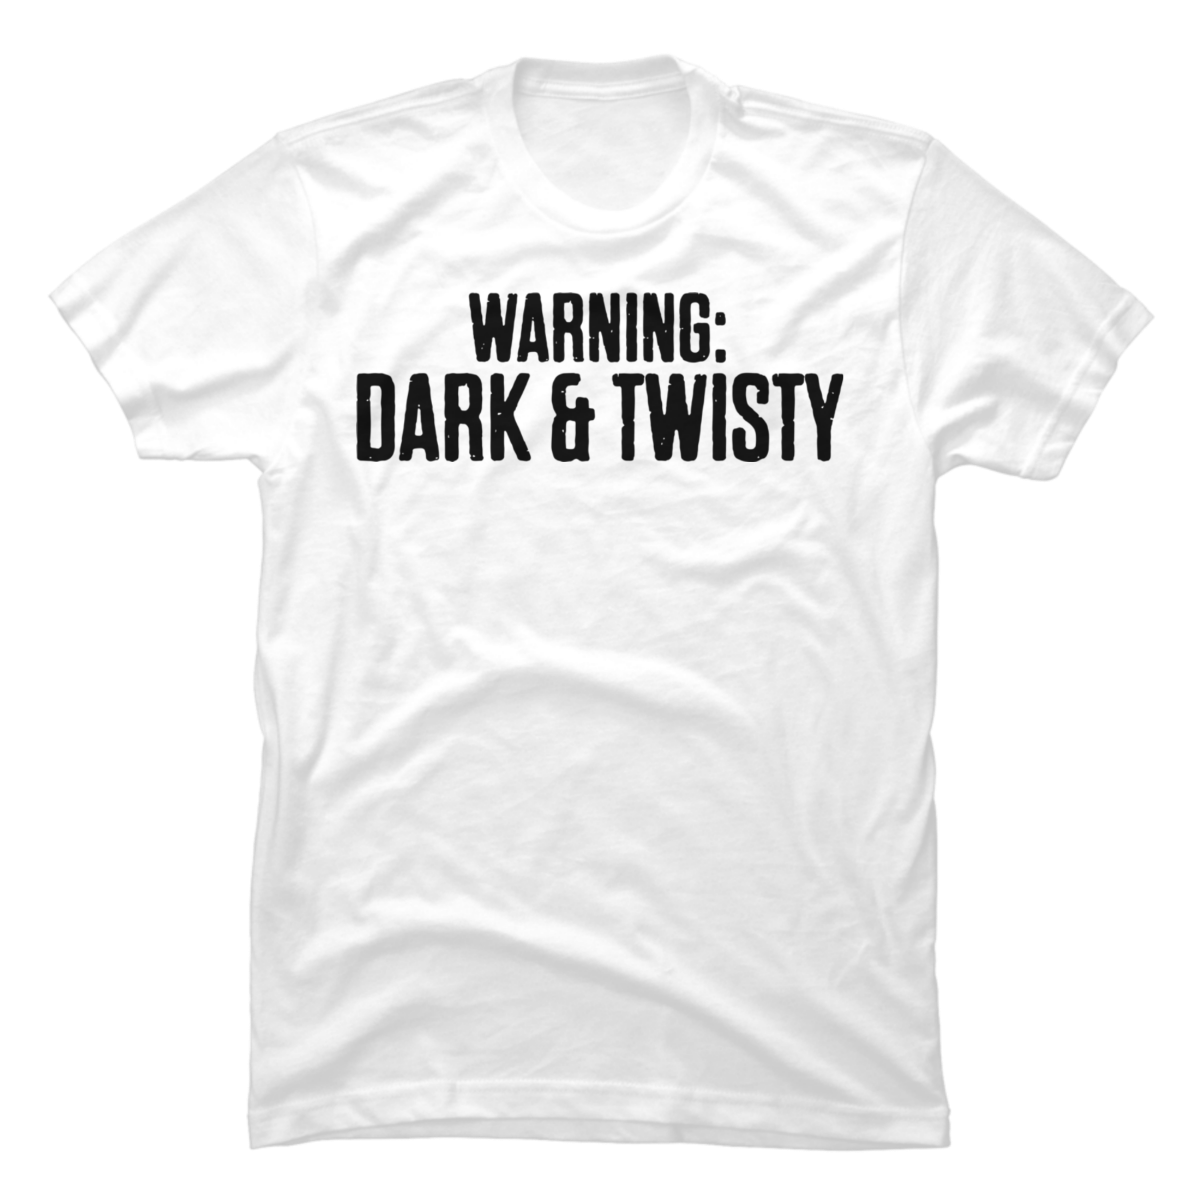 dark and twisty shirt